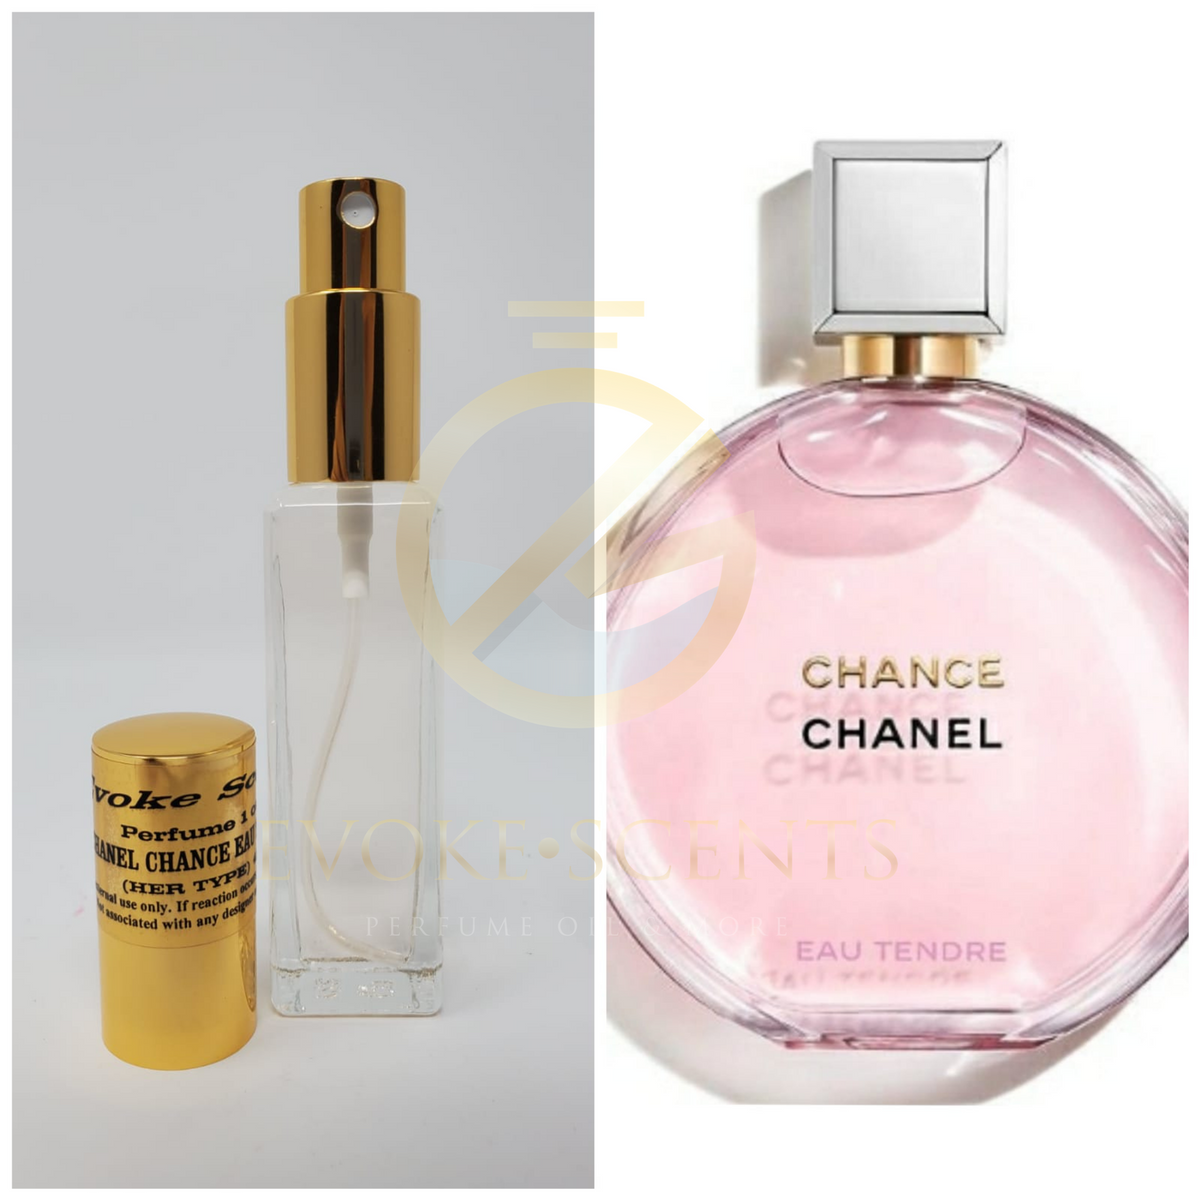 4 Lbs Chanel: Coco Mademoiselle (W) ½Gal - 4 Pound Oils (½ Gallon)